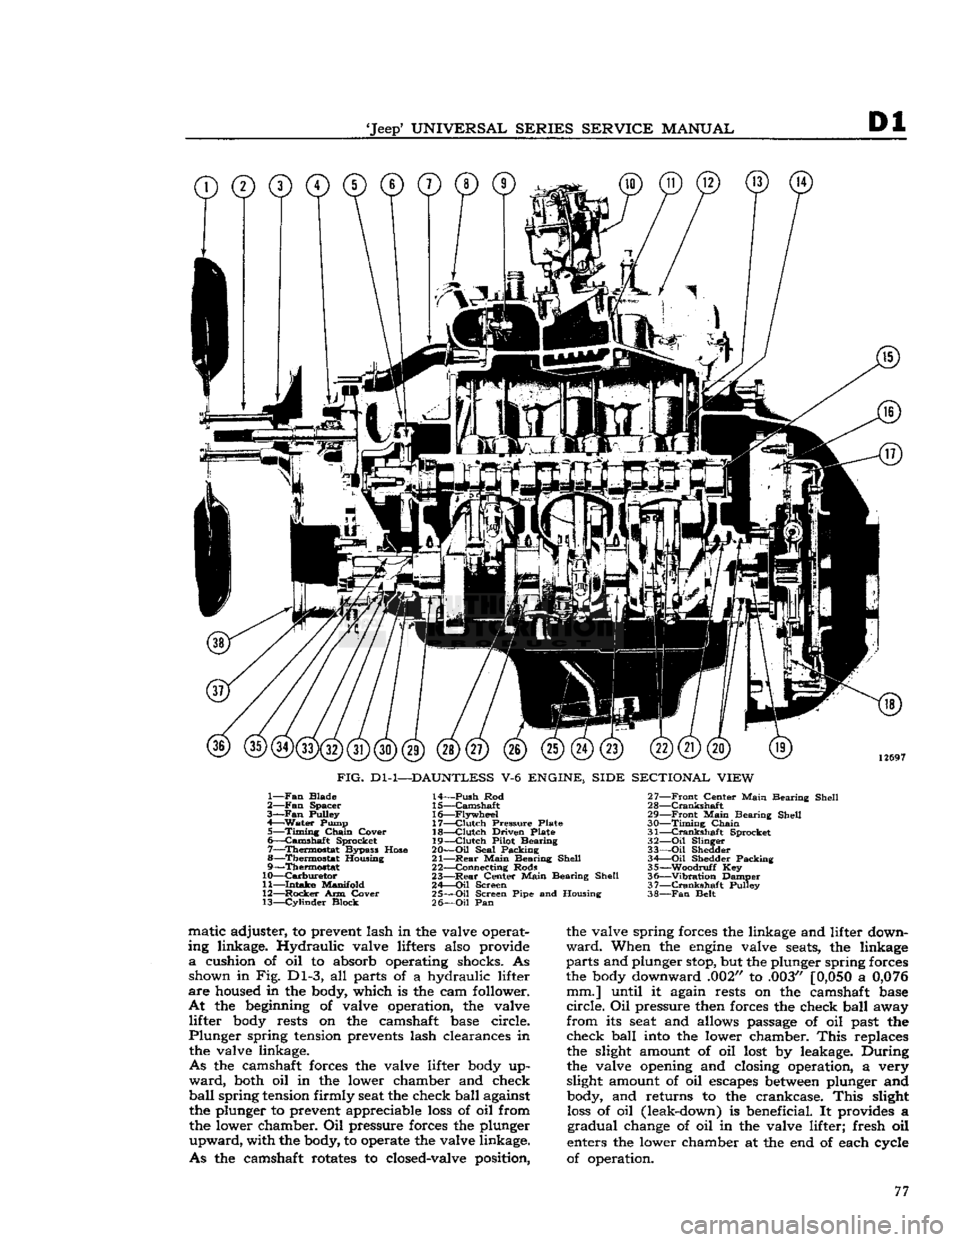 JEEP CJ 1953  Service Manual 
Jeep
 UNIVERSAL SERIES SERVICE
 MANUAL 

Dl 

©©©©©©©©© 

12697 

FIG.
 Dl-1—DAUNTLESS
 V-6
 ENGINE, SIDE SECTIONAL VIEW 

1—
 Fan
 Blade 
2—
 Fan
 Spacer 

3—Fan
 Pulley 
4—
 Wa